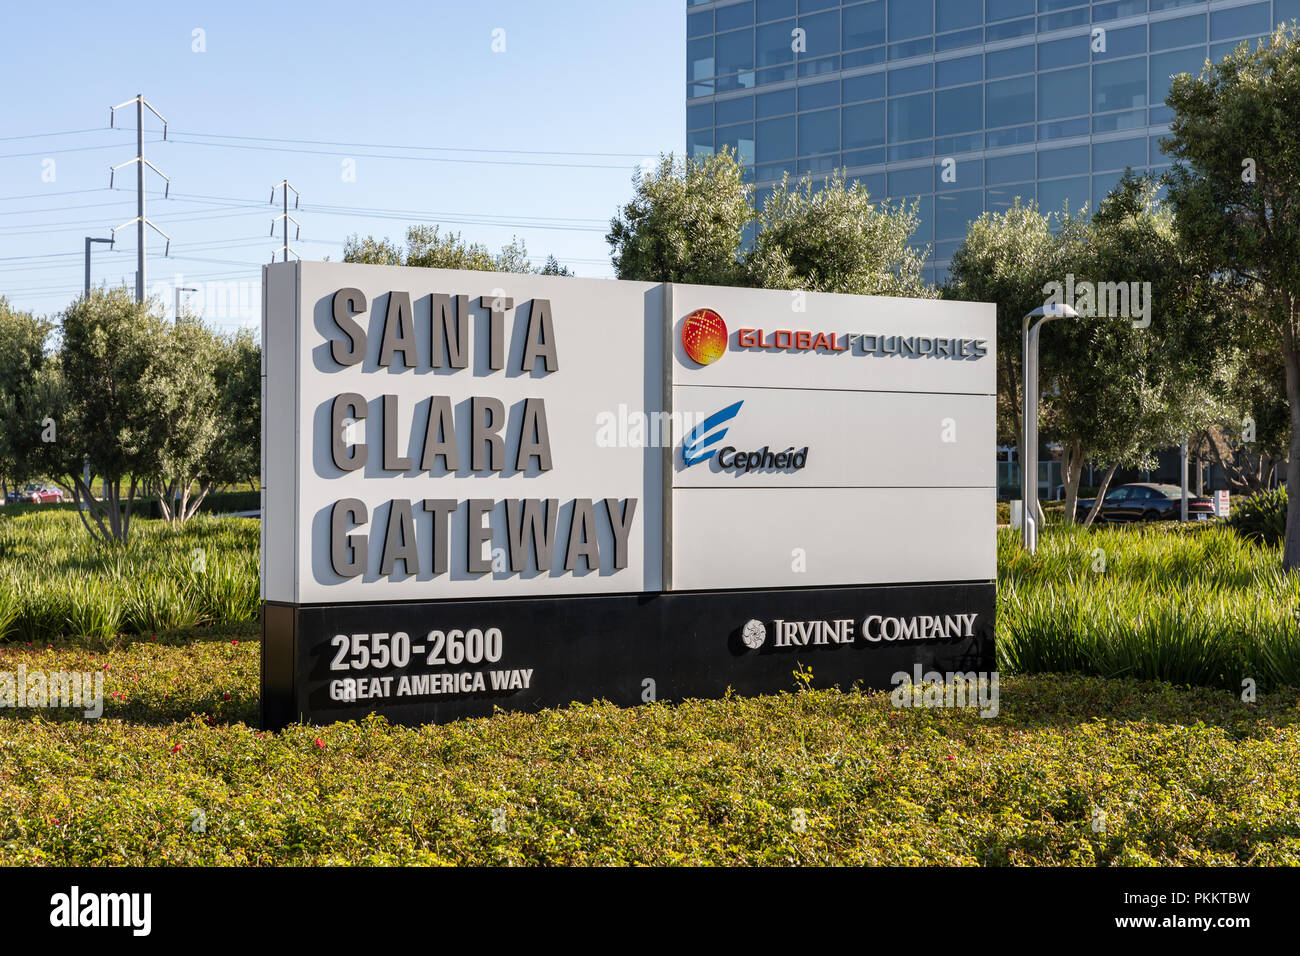 Santa Clara, la passerelle 2550-2600 Great America, signe entre les bâtiments ; Santa Clara, San José, Californie, États-Unis Banque D'Images